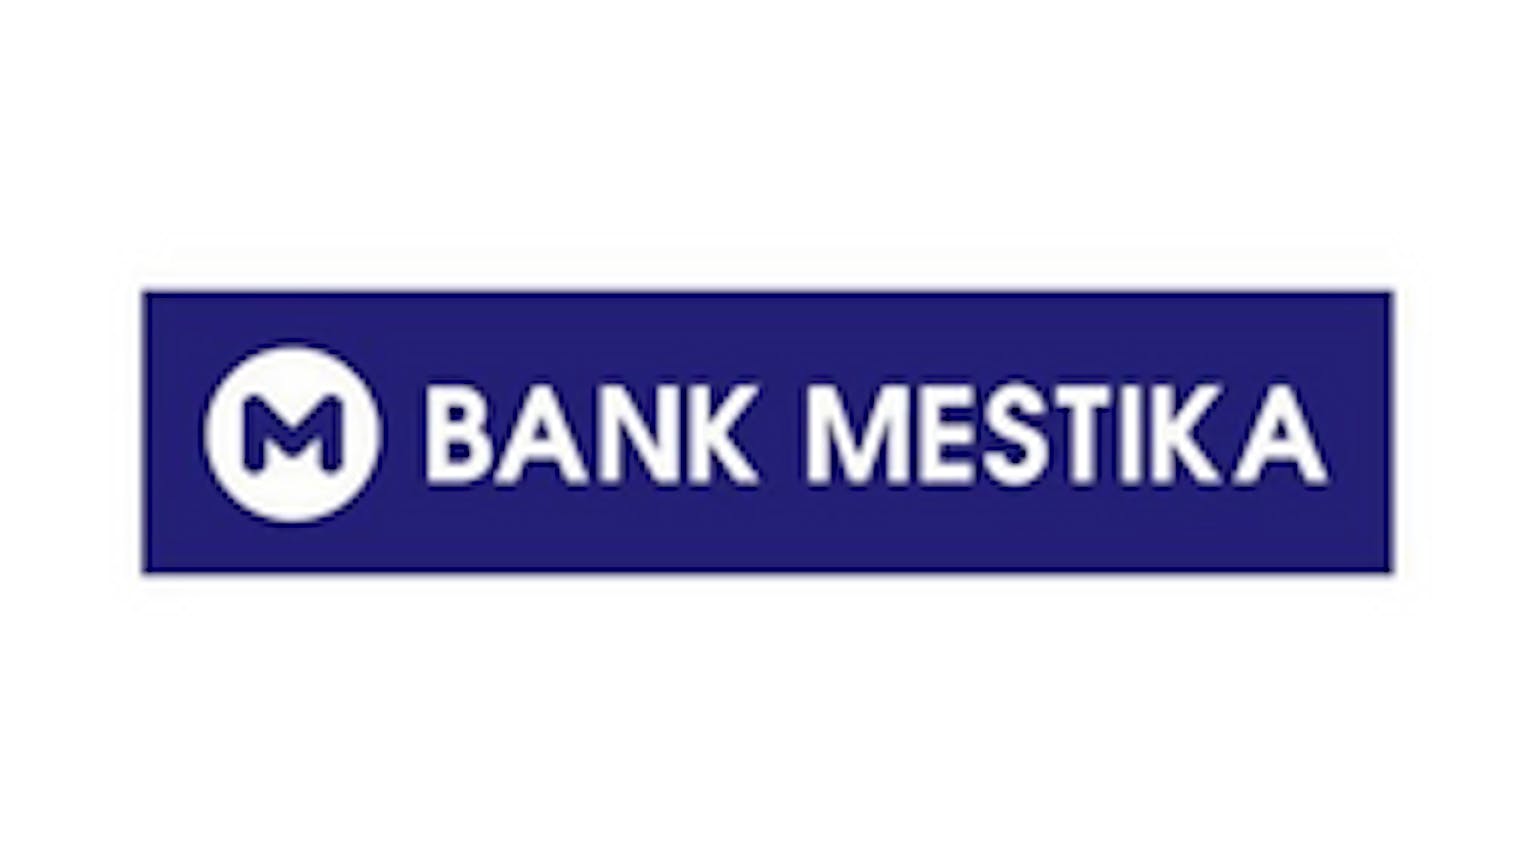 Bank Mestika KMG Reguler